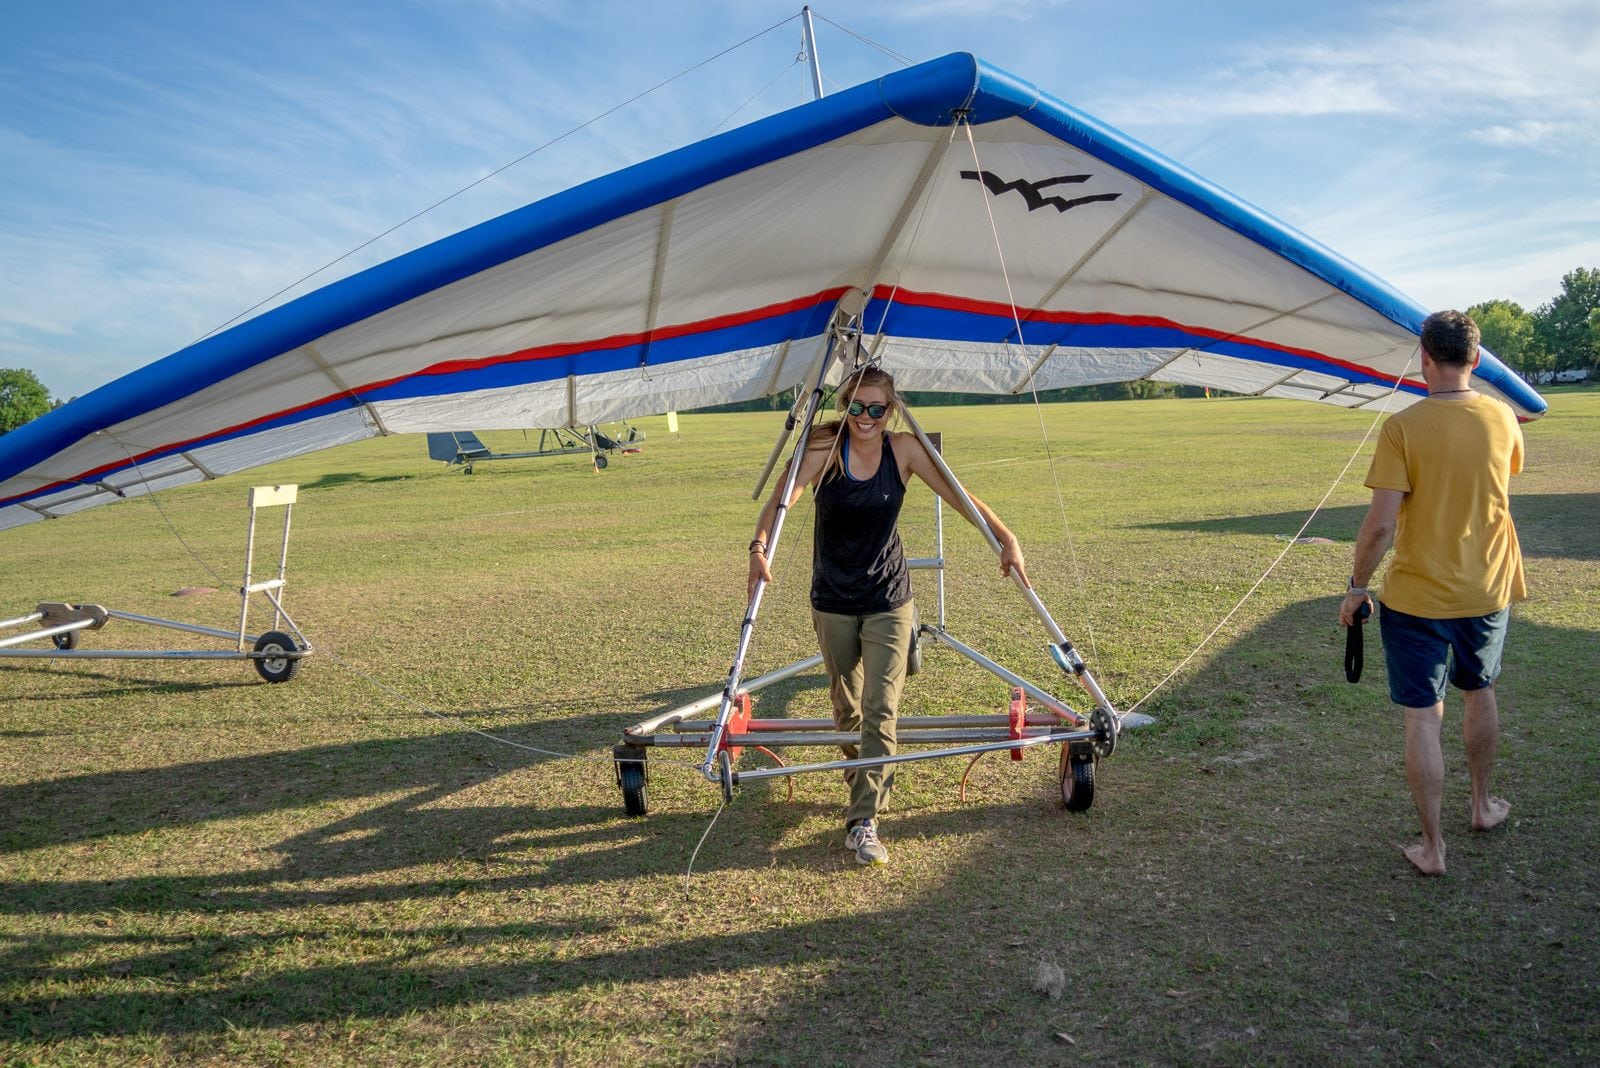 Sara Weaver after landing her hang glider